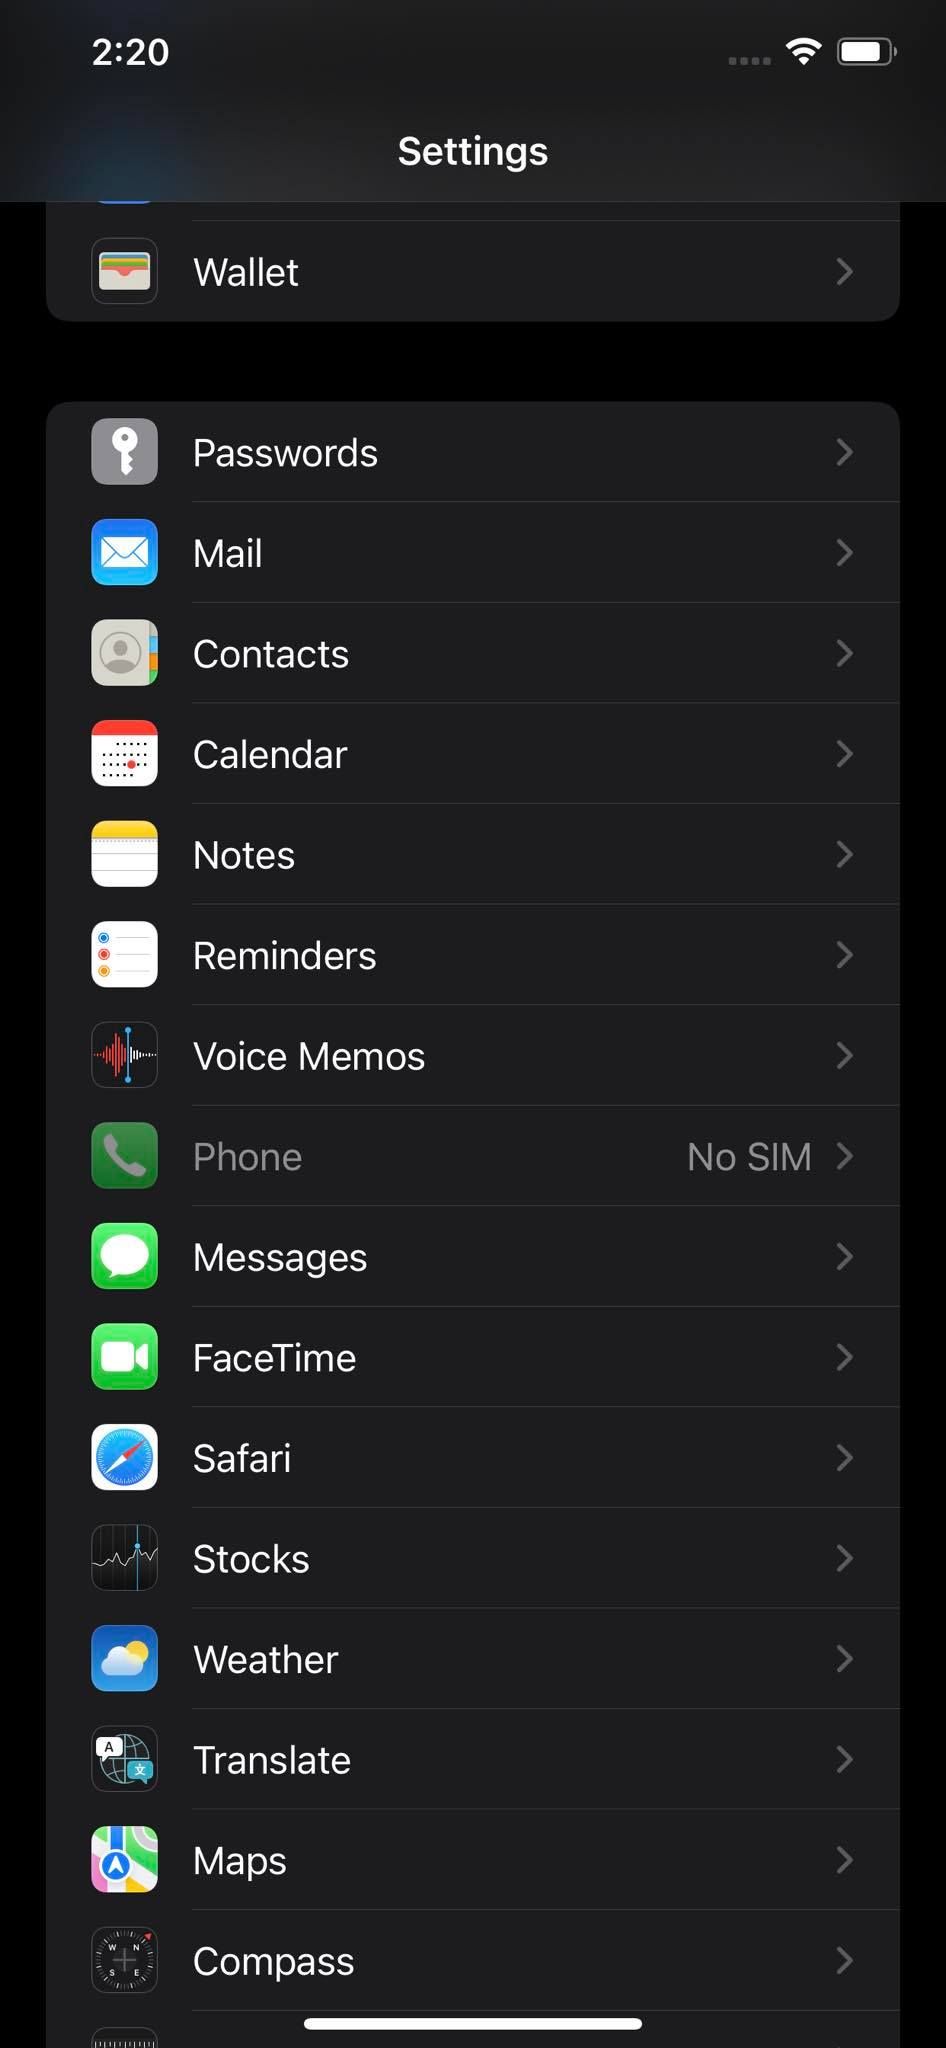 Safari in iPhone's Settings